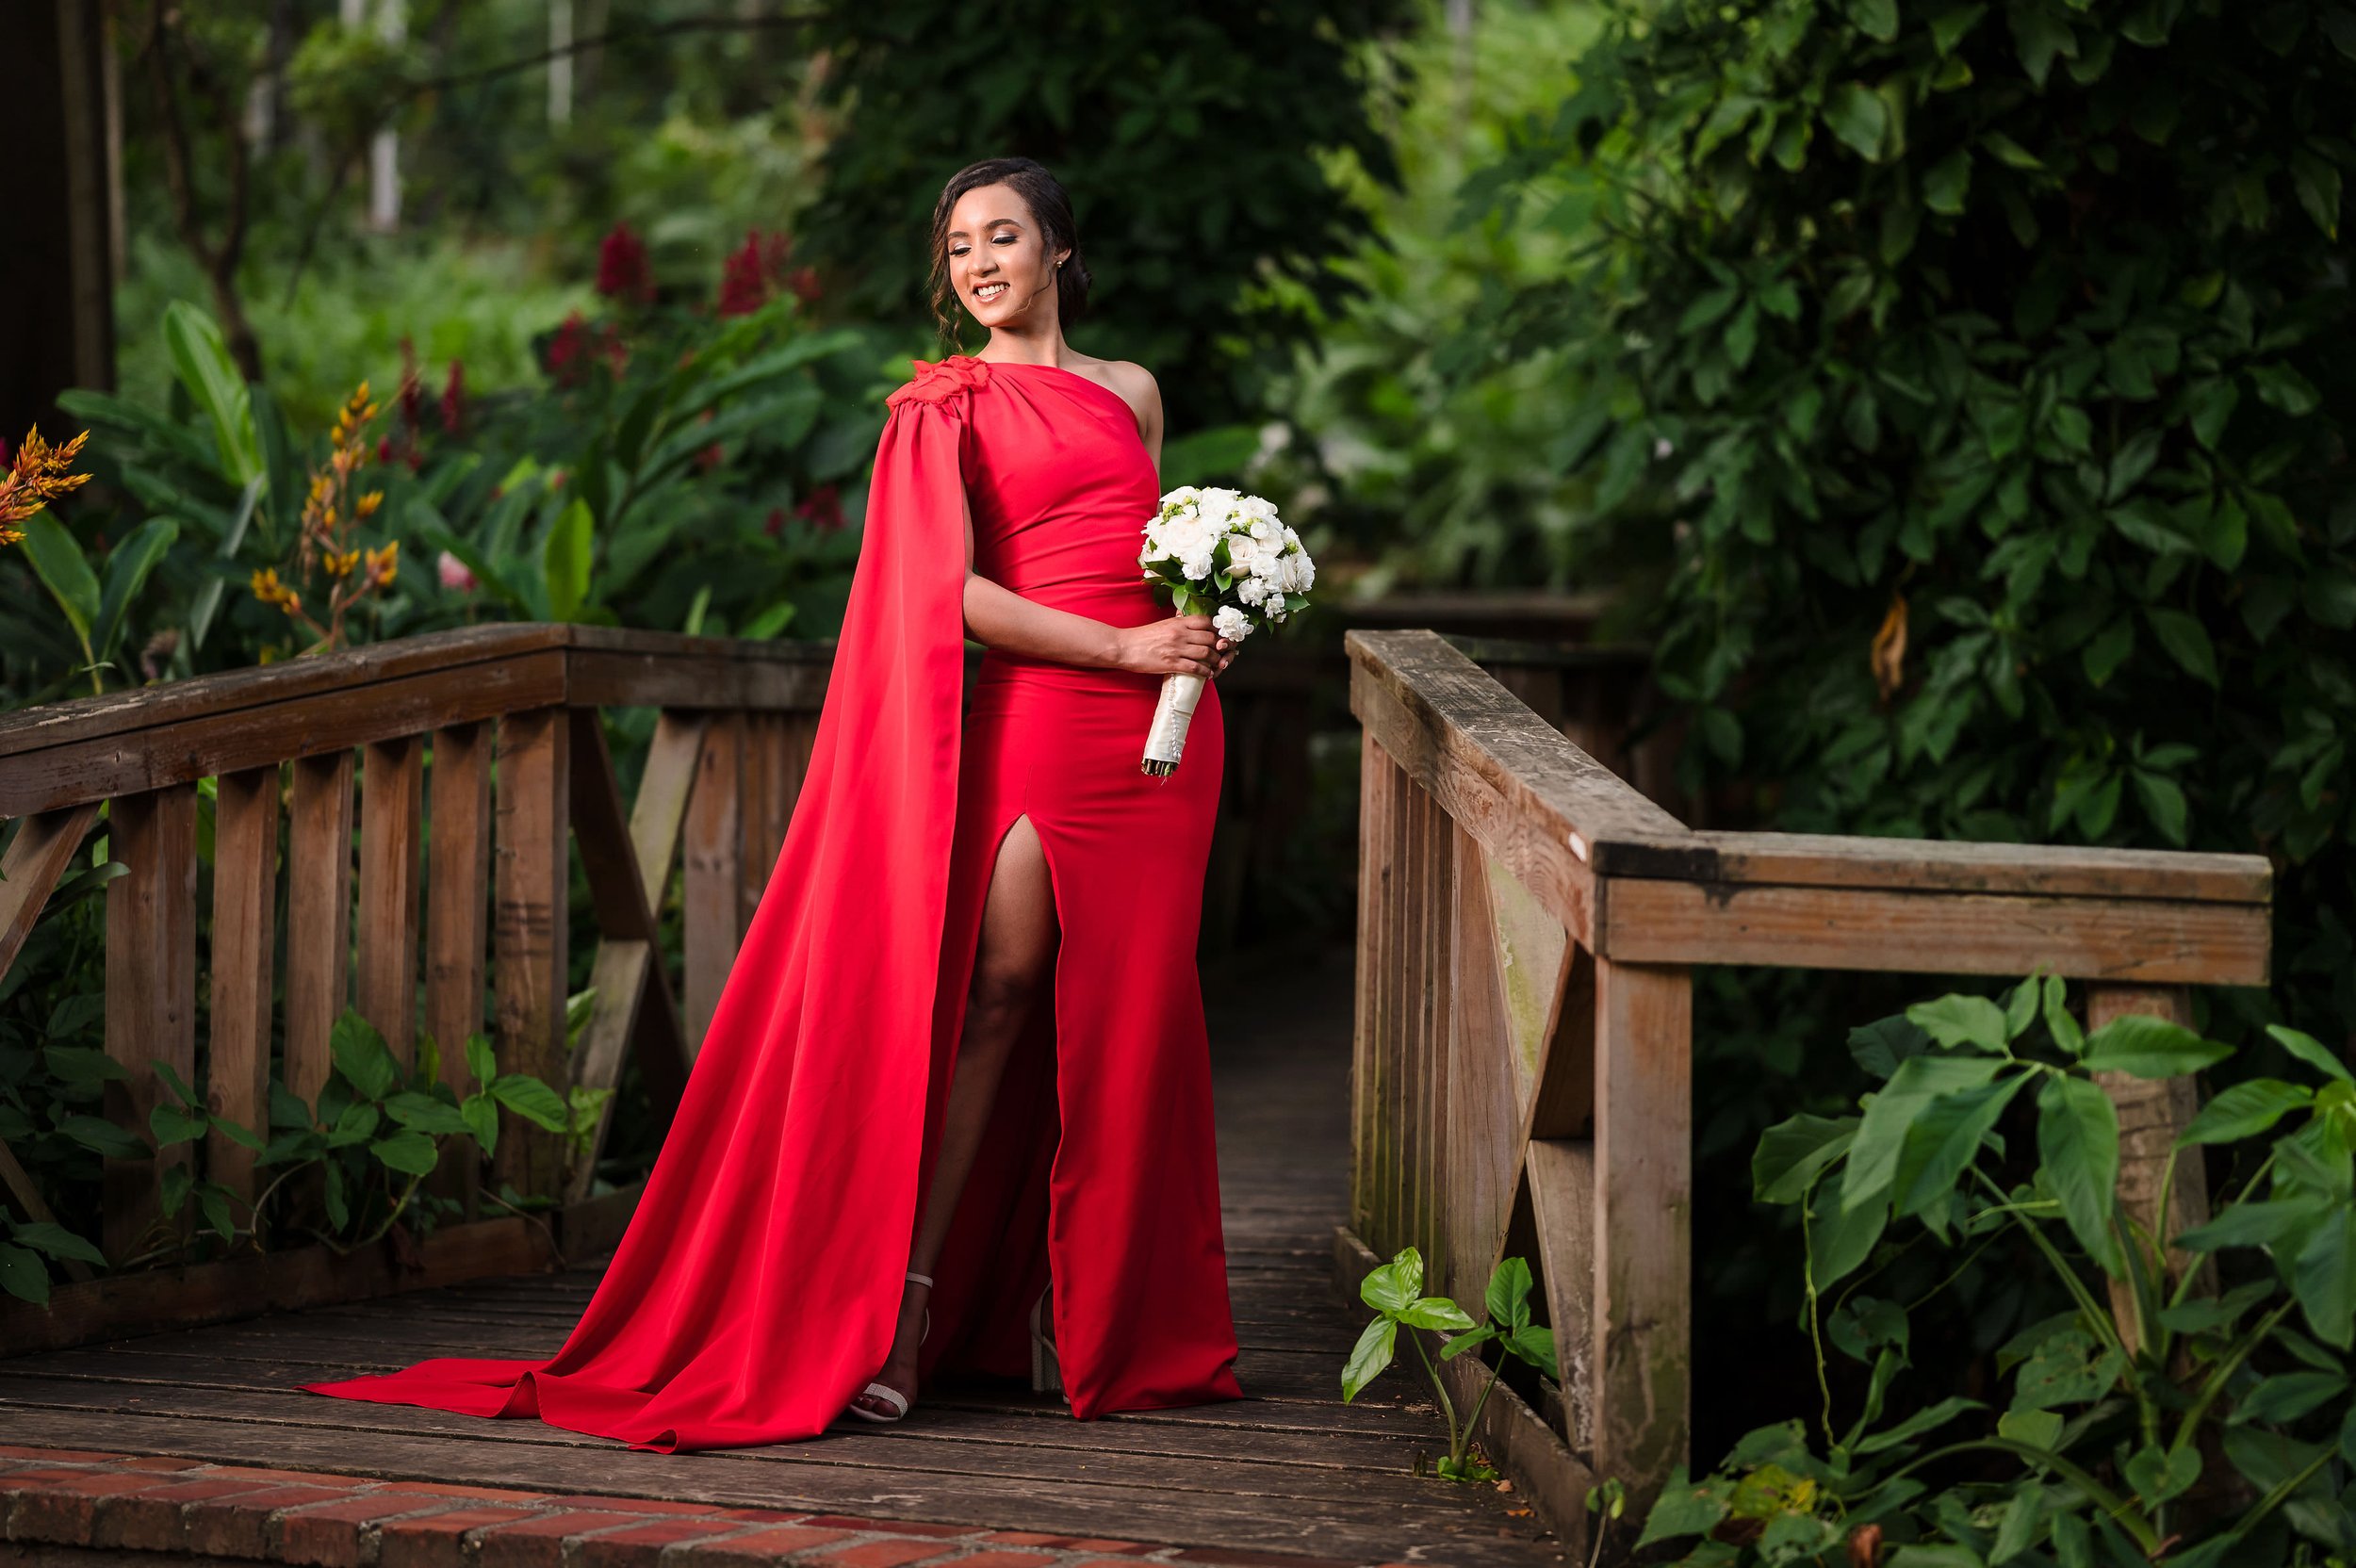 Jardin_Botanico_Wedding_photoshoot_sesion_preboda_red_dress_Cristina_Angel_5683.JPG